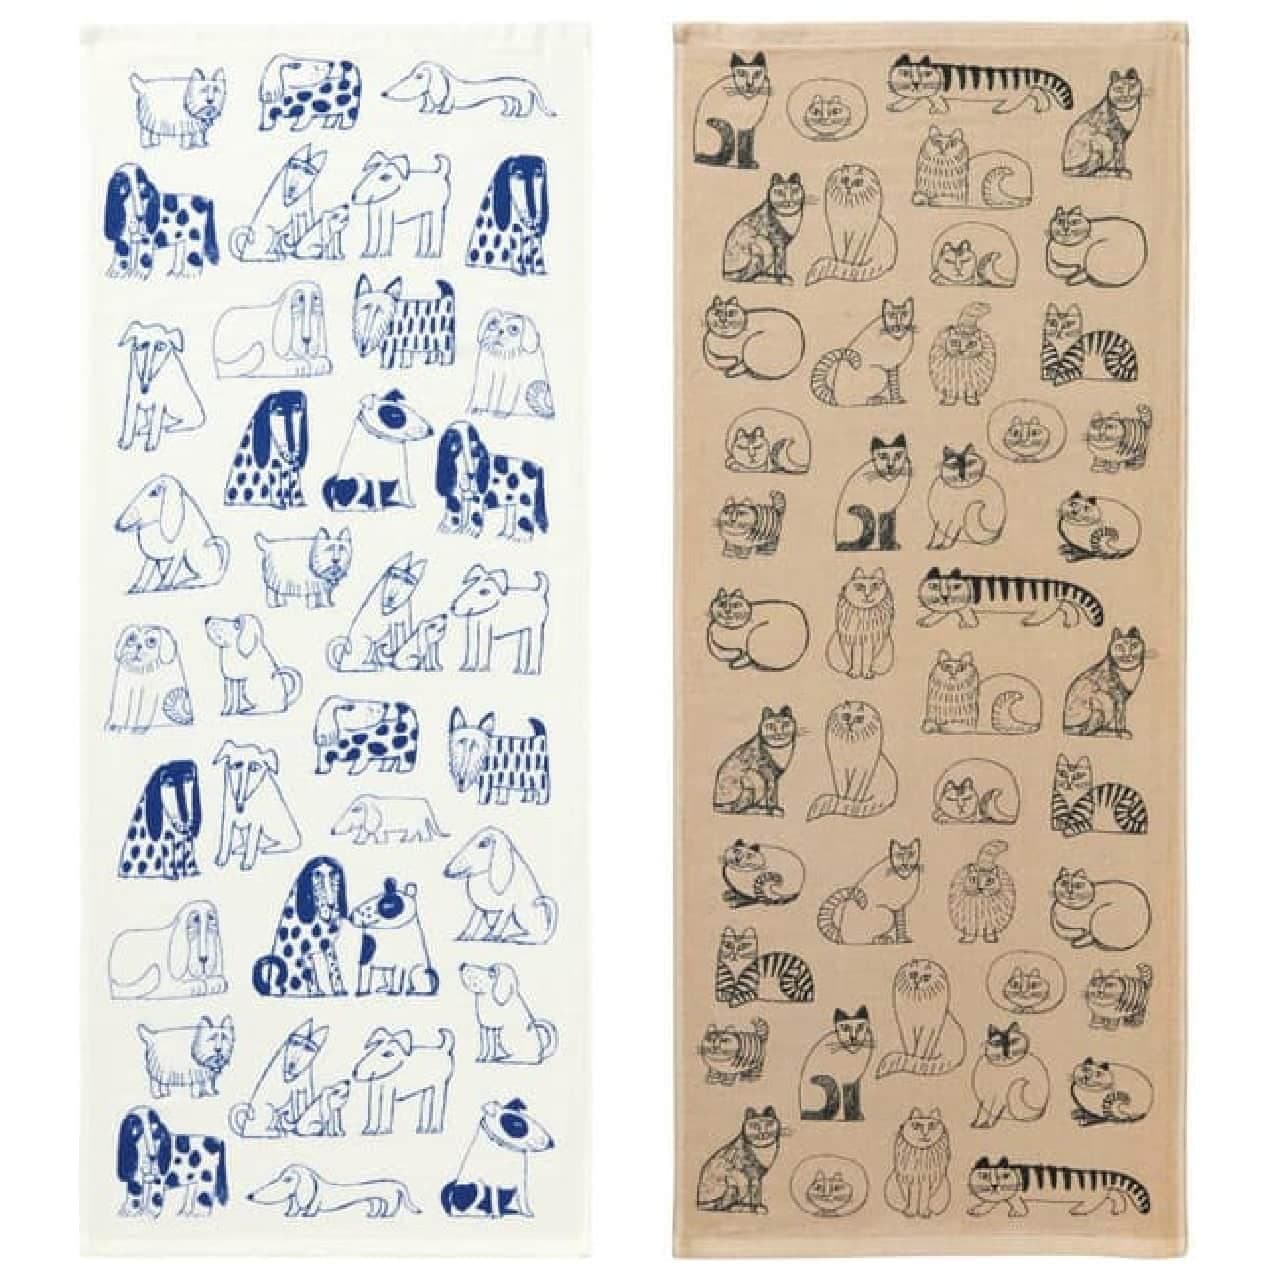 Lisa Larson Towel Set of 4 towels -- Sakura Mikey, Mori no Mikey, Sketch Cat, Sketch Dog in gift box